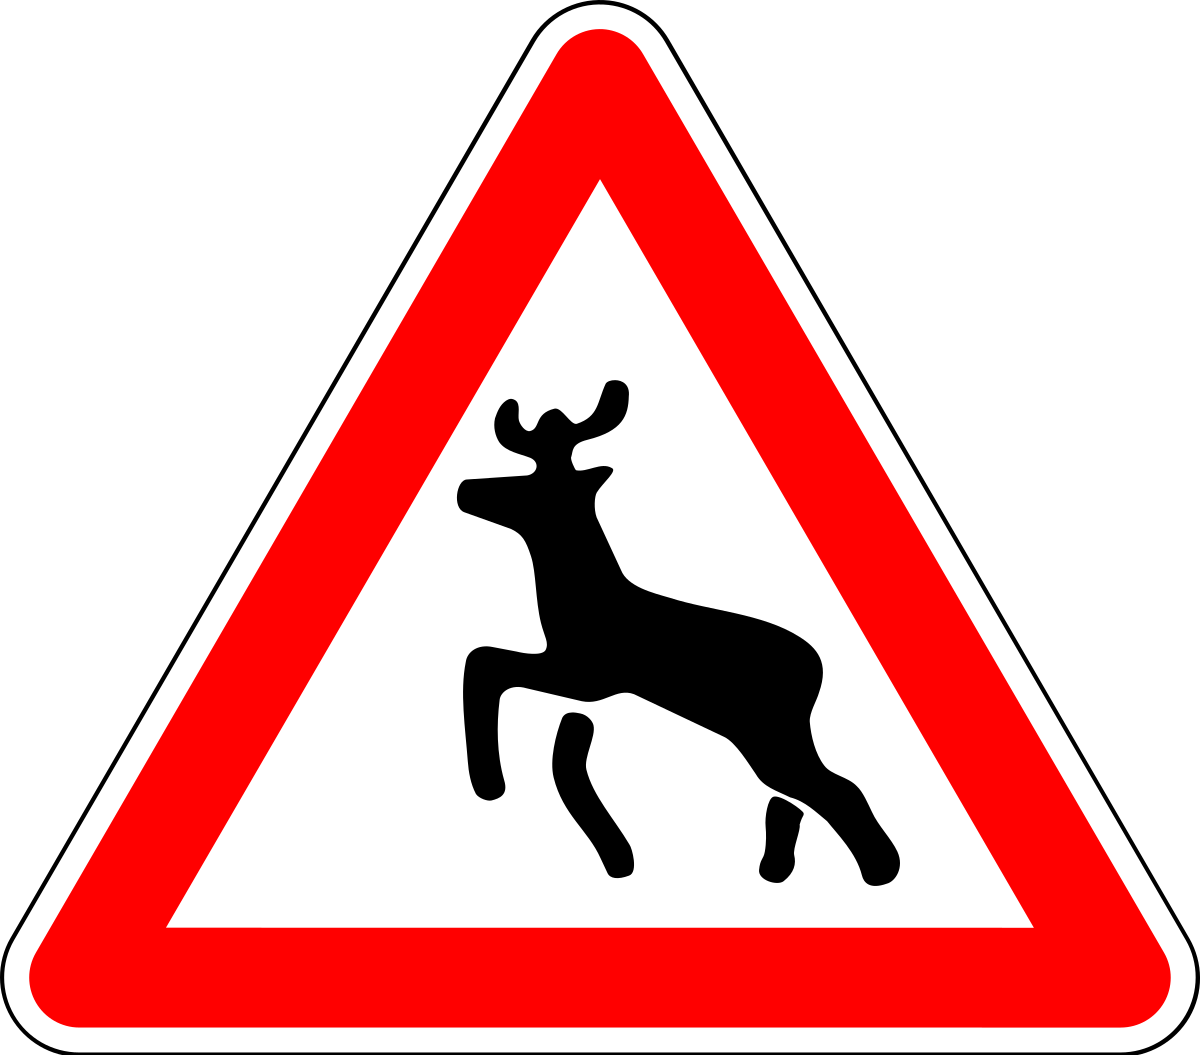 Download File:Ua 1.36 warning-wild animal crossing.svg - Wikimedia Commons